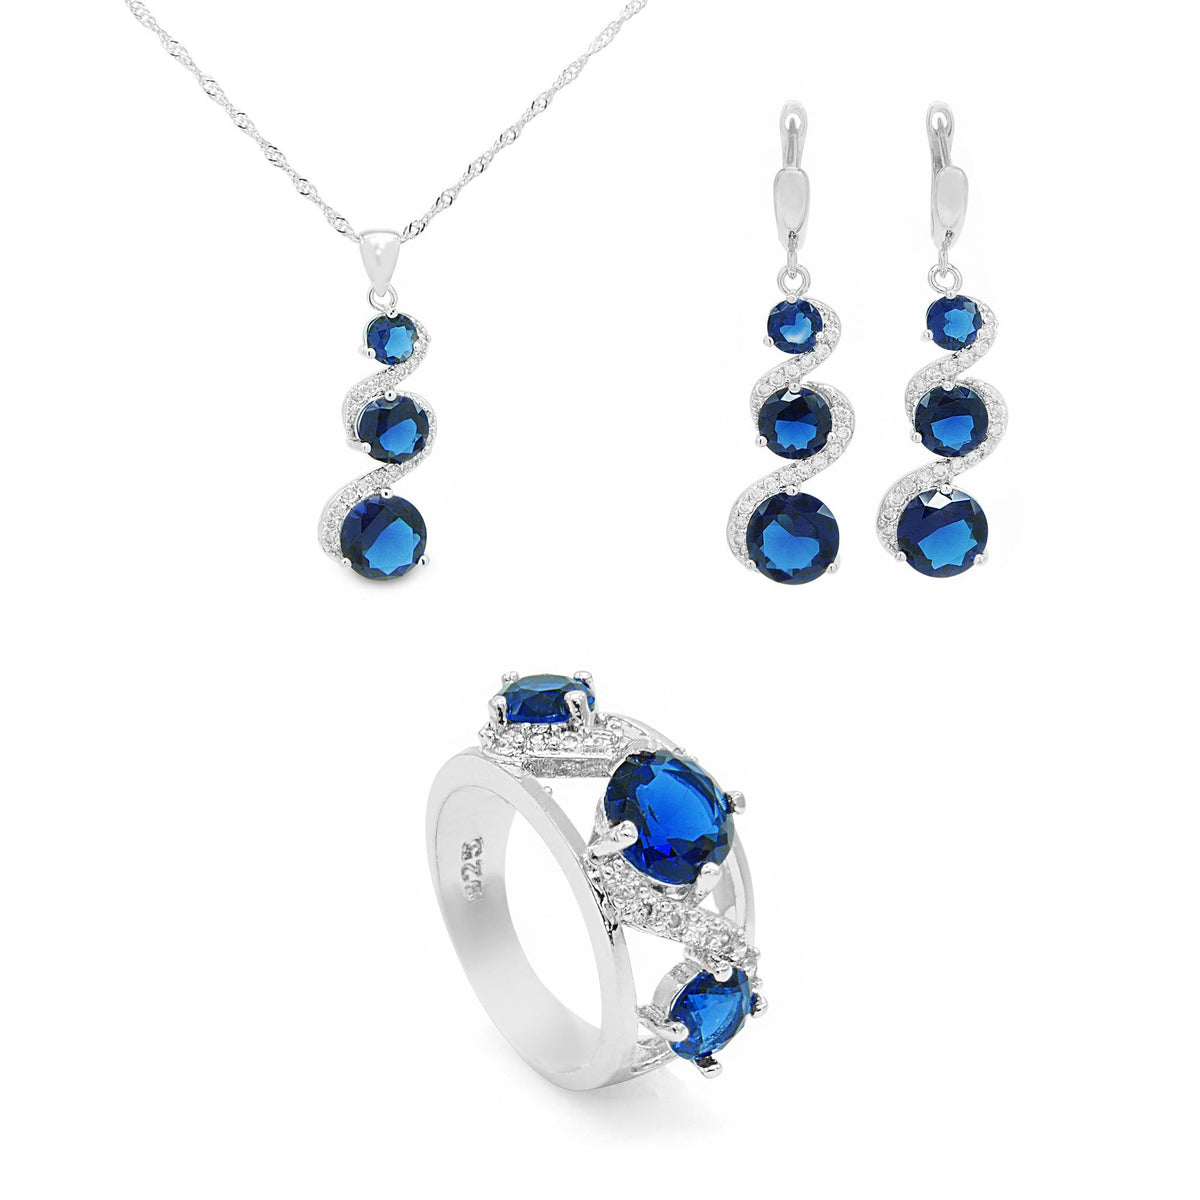 Blue sapphire jewellery set| Demi & Co| Free UK postage - DEMI+CO Jewellery